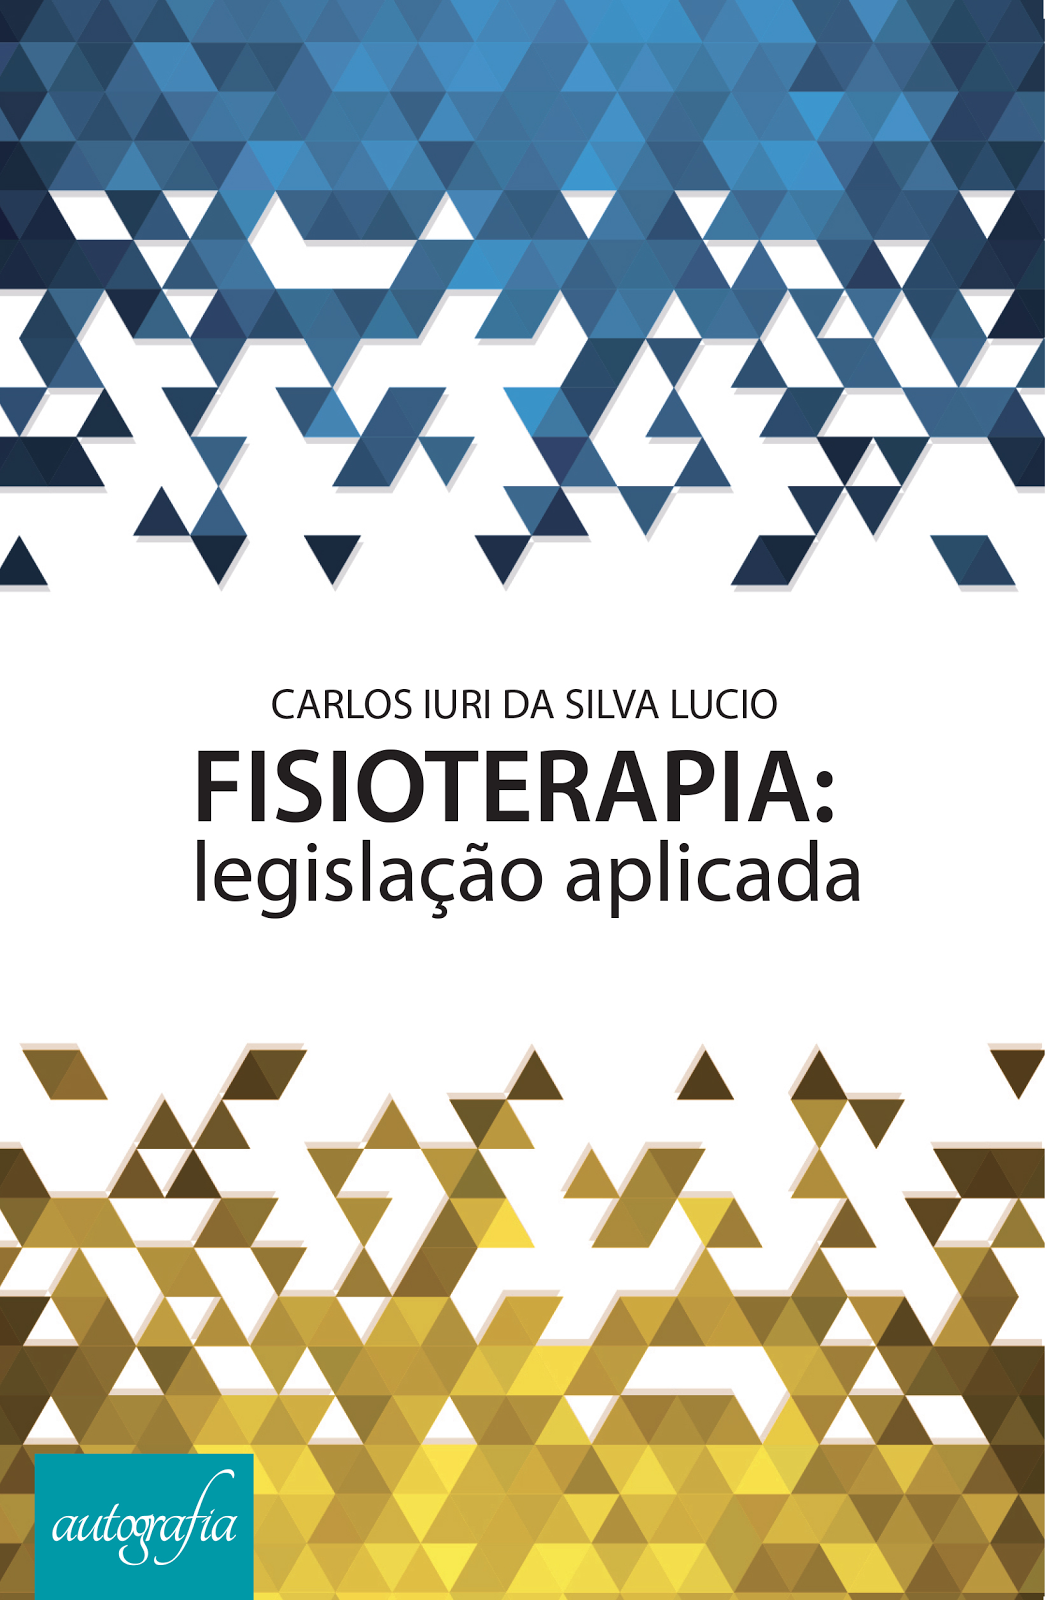 FICHA DE ANAMNESE FISIOTERAPIA Word editavel (1) - Fisioterapia